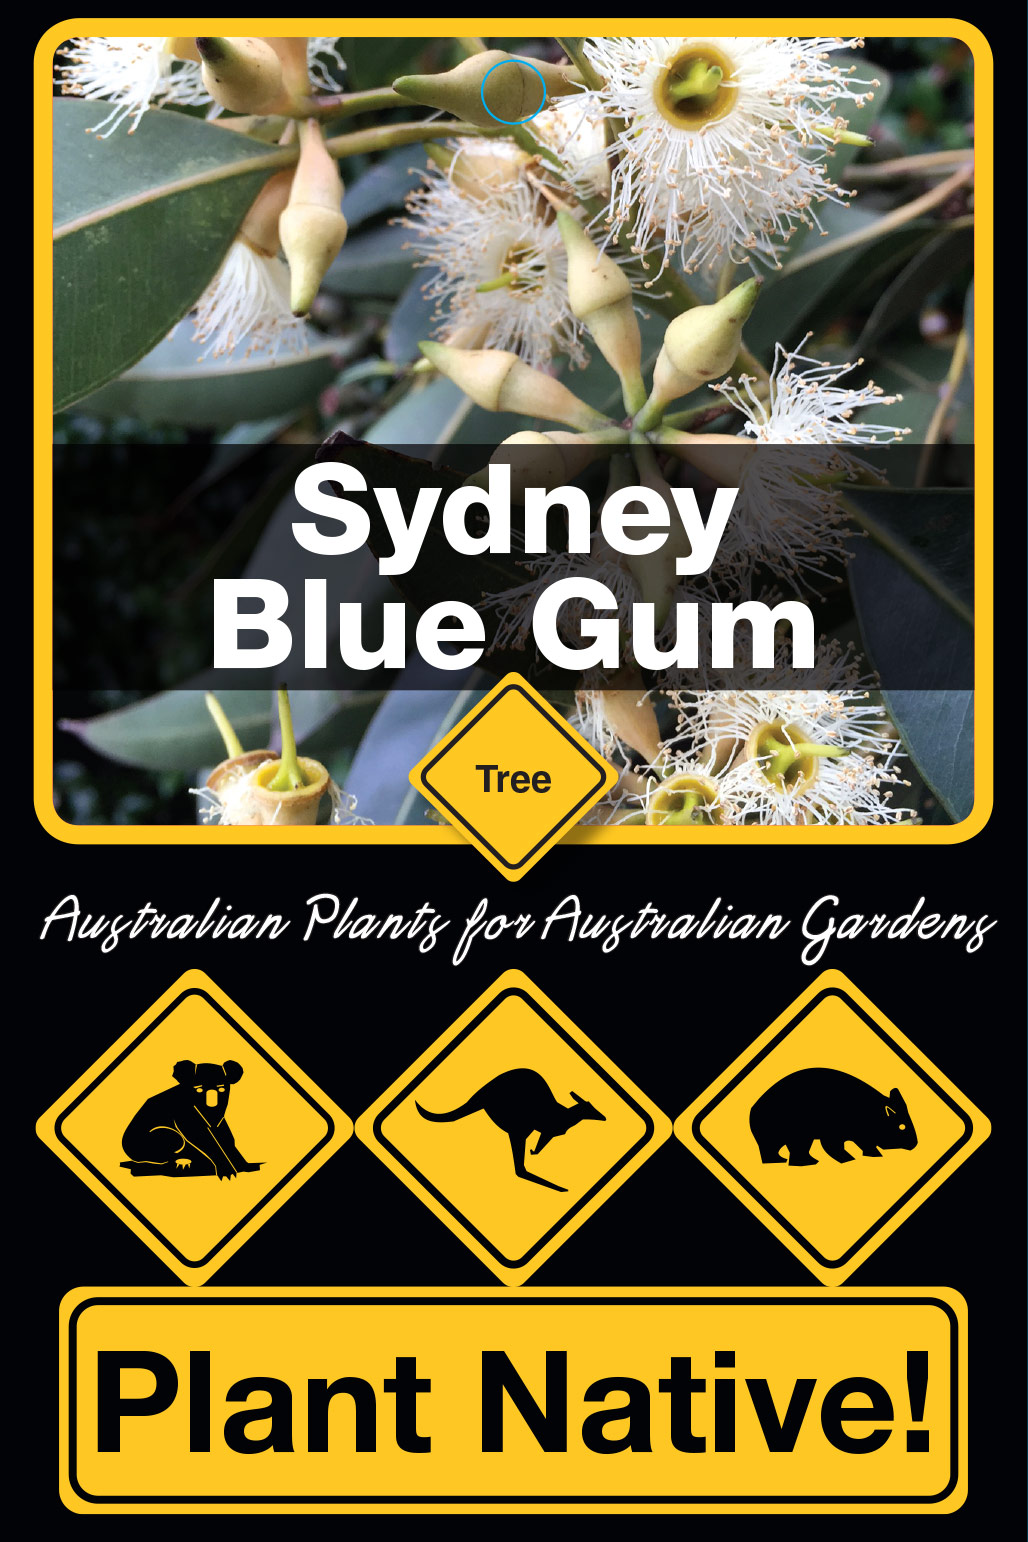 Sydney Blue Gum - Plant Native!